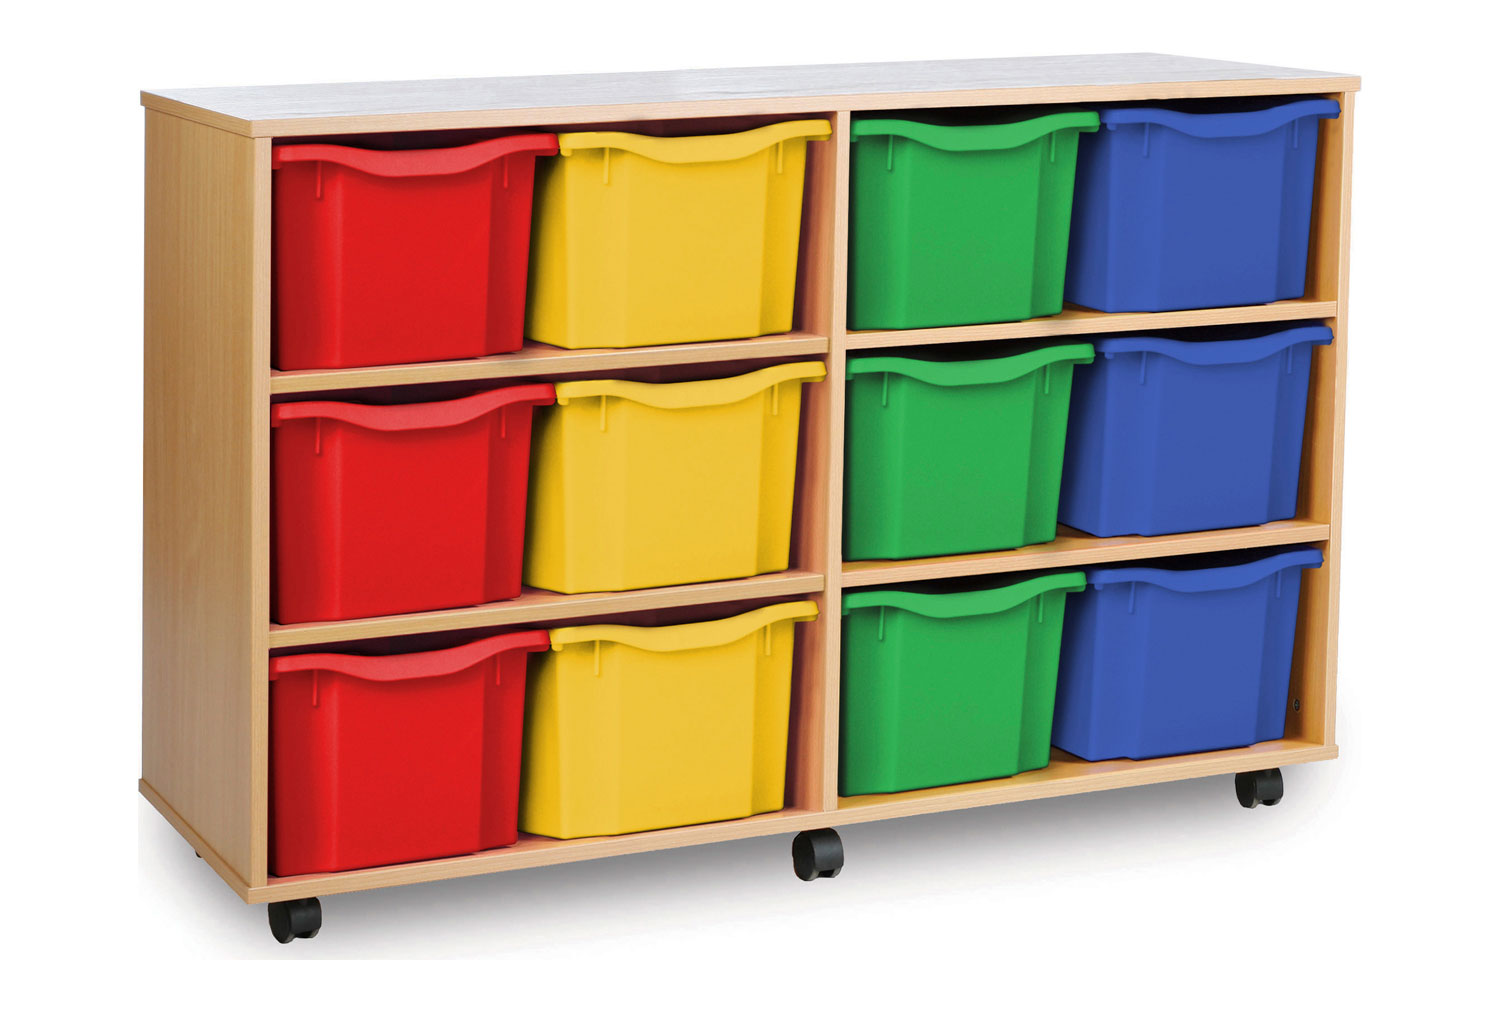 12 Extra Deep Classroom Tray Storage Unit, Red/Blue/Green/Yellow Classroom Trays